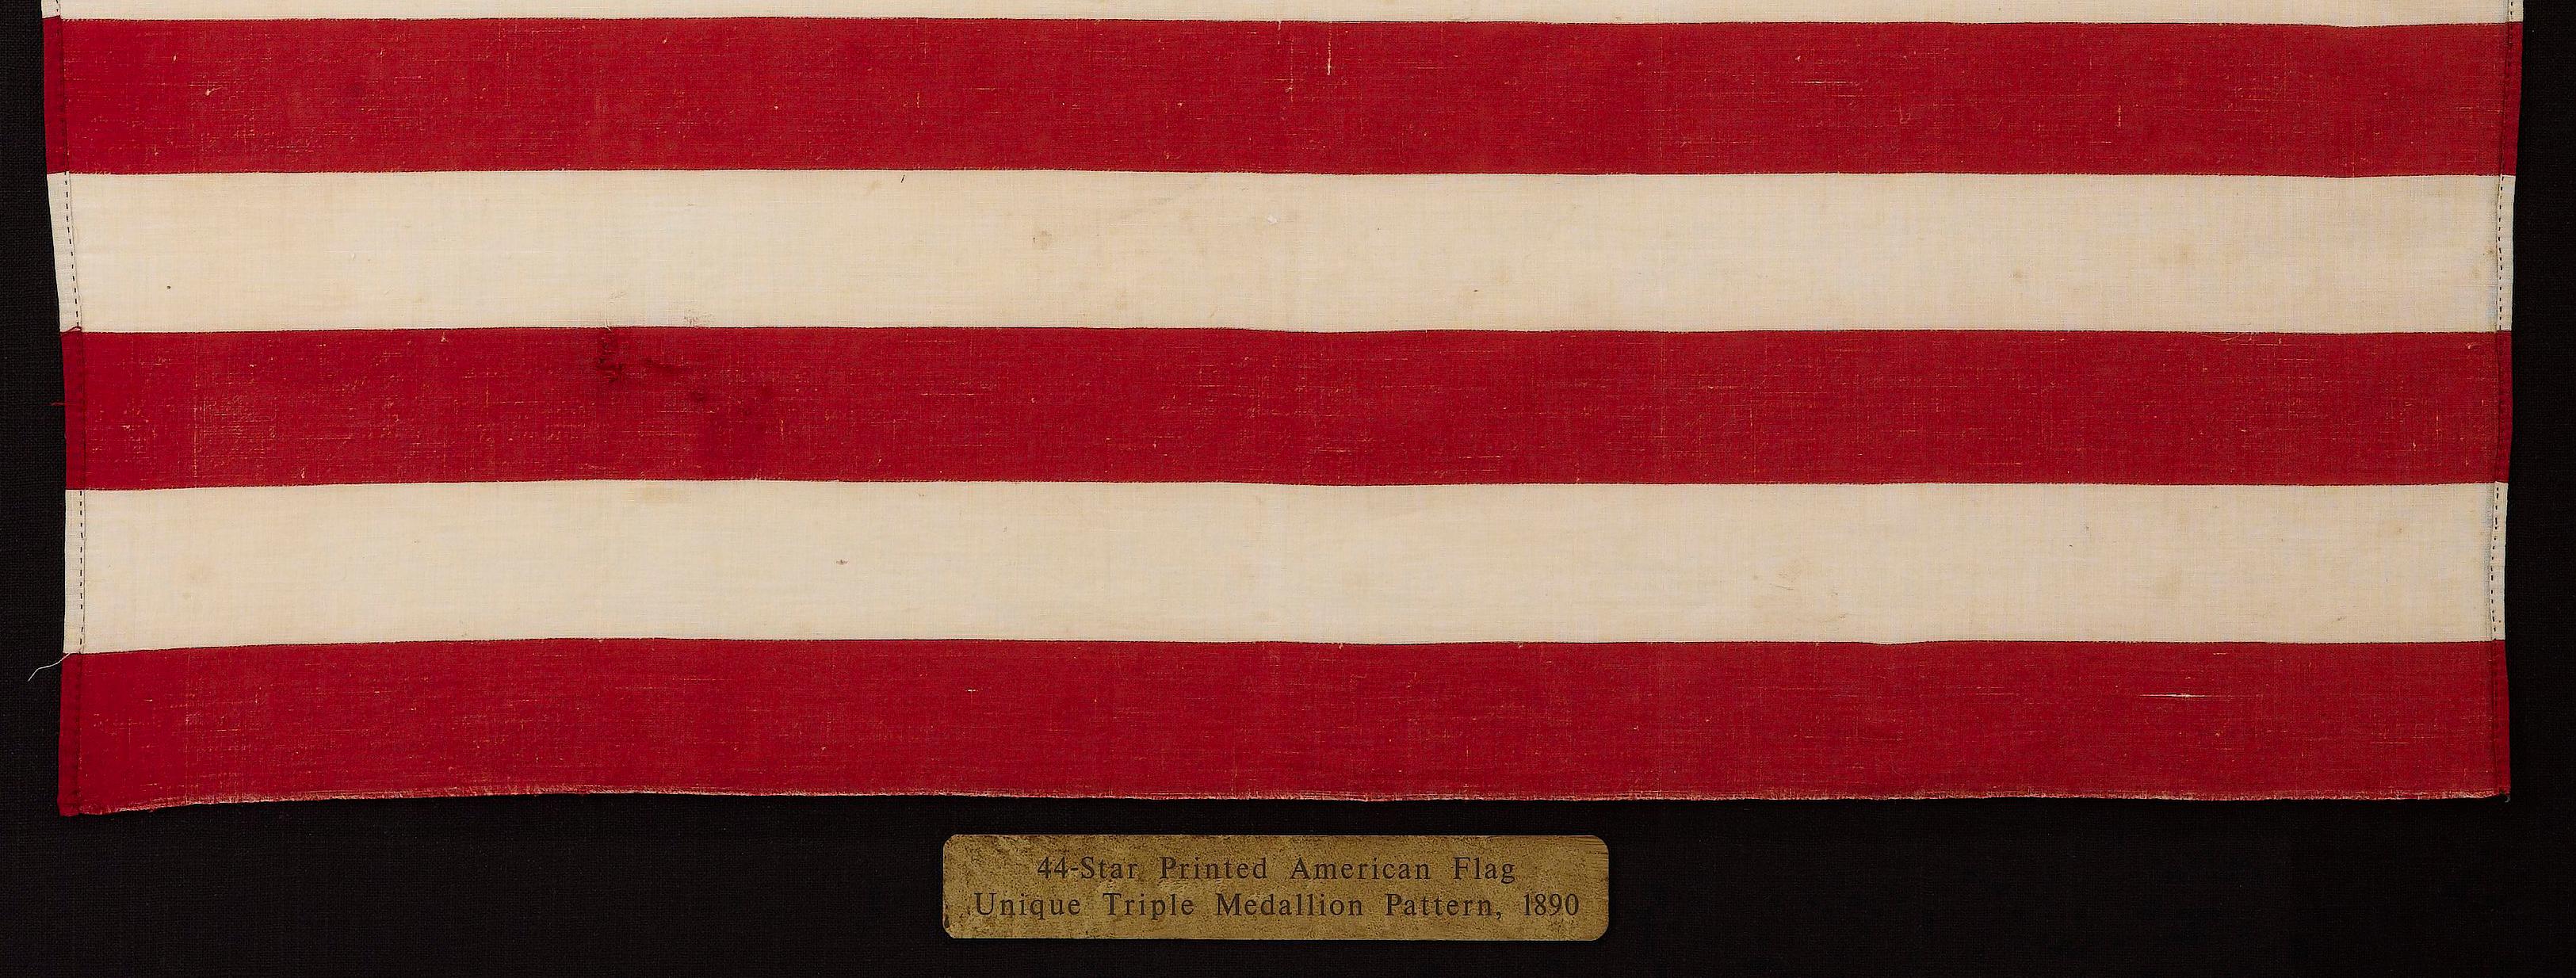 Cotton 44-Star Printed American Flag, Unique Triple Medallion Pattern, 1890